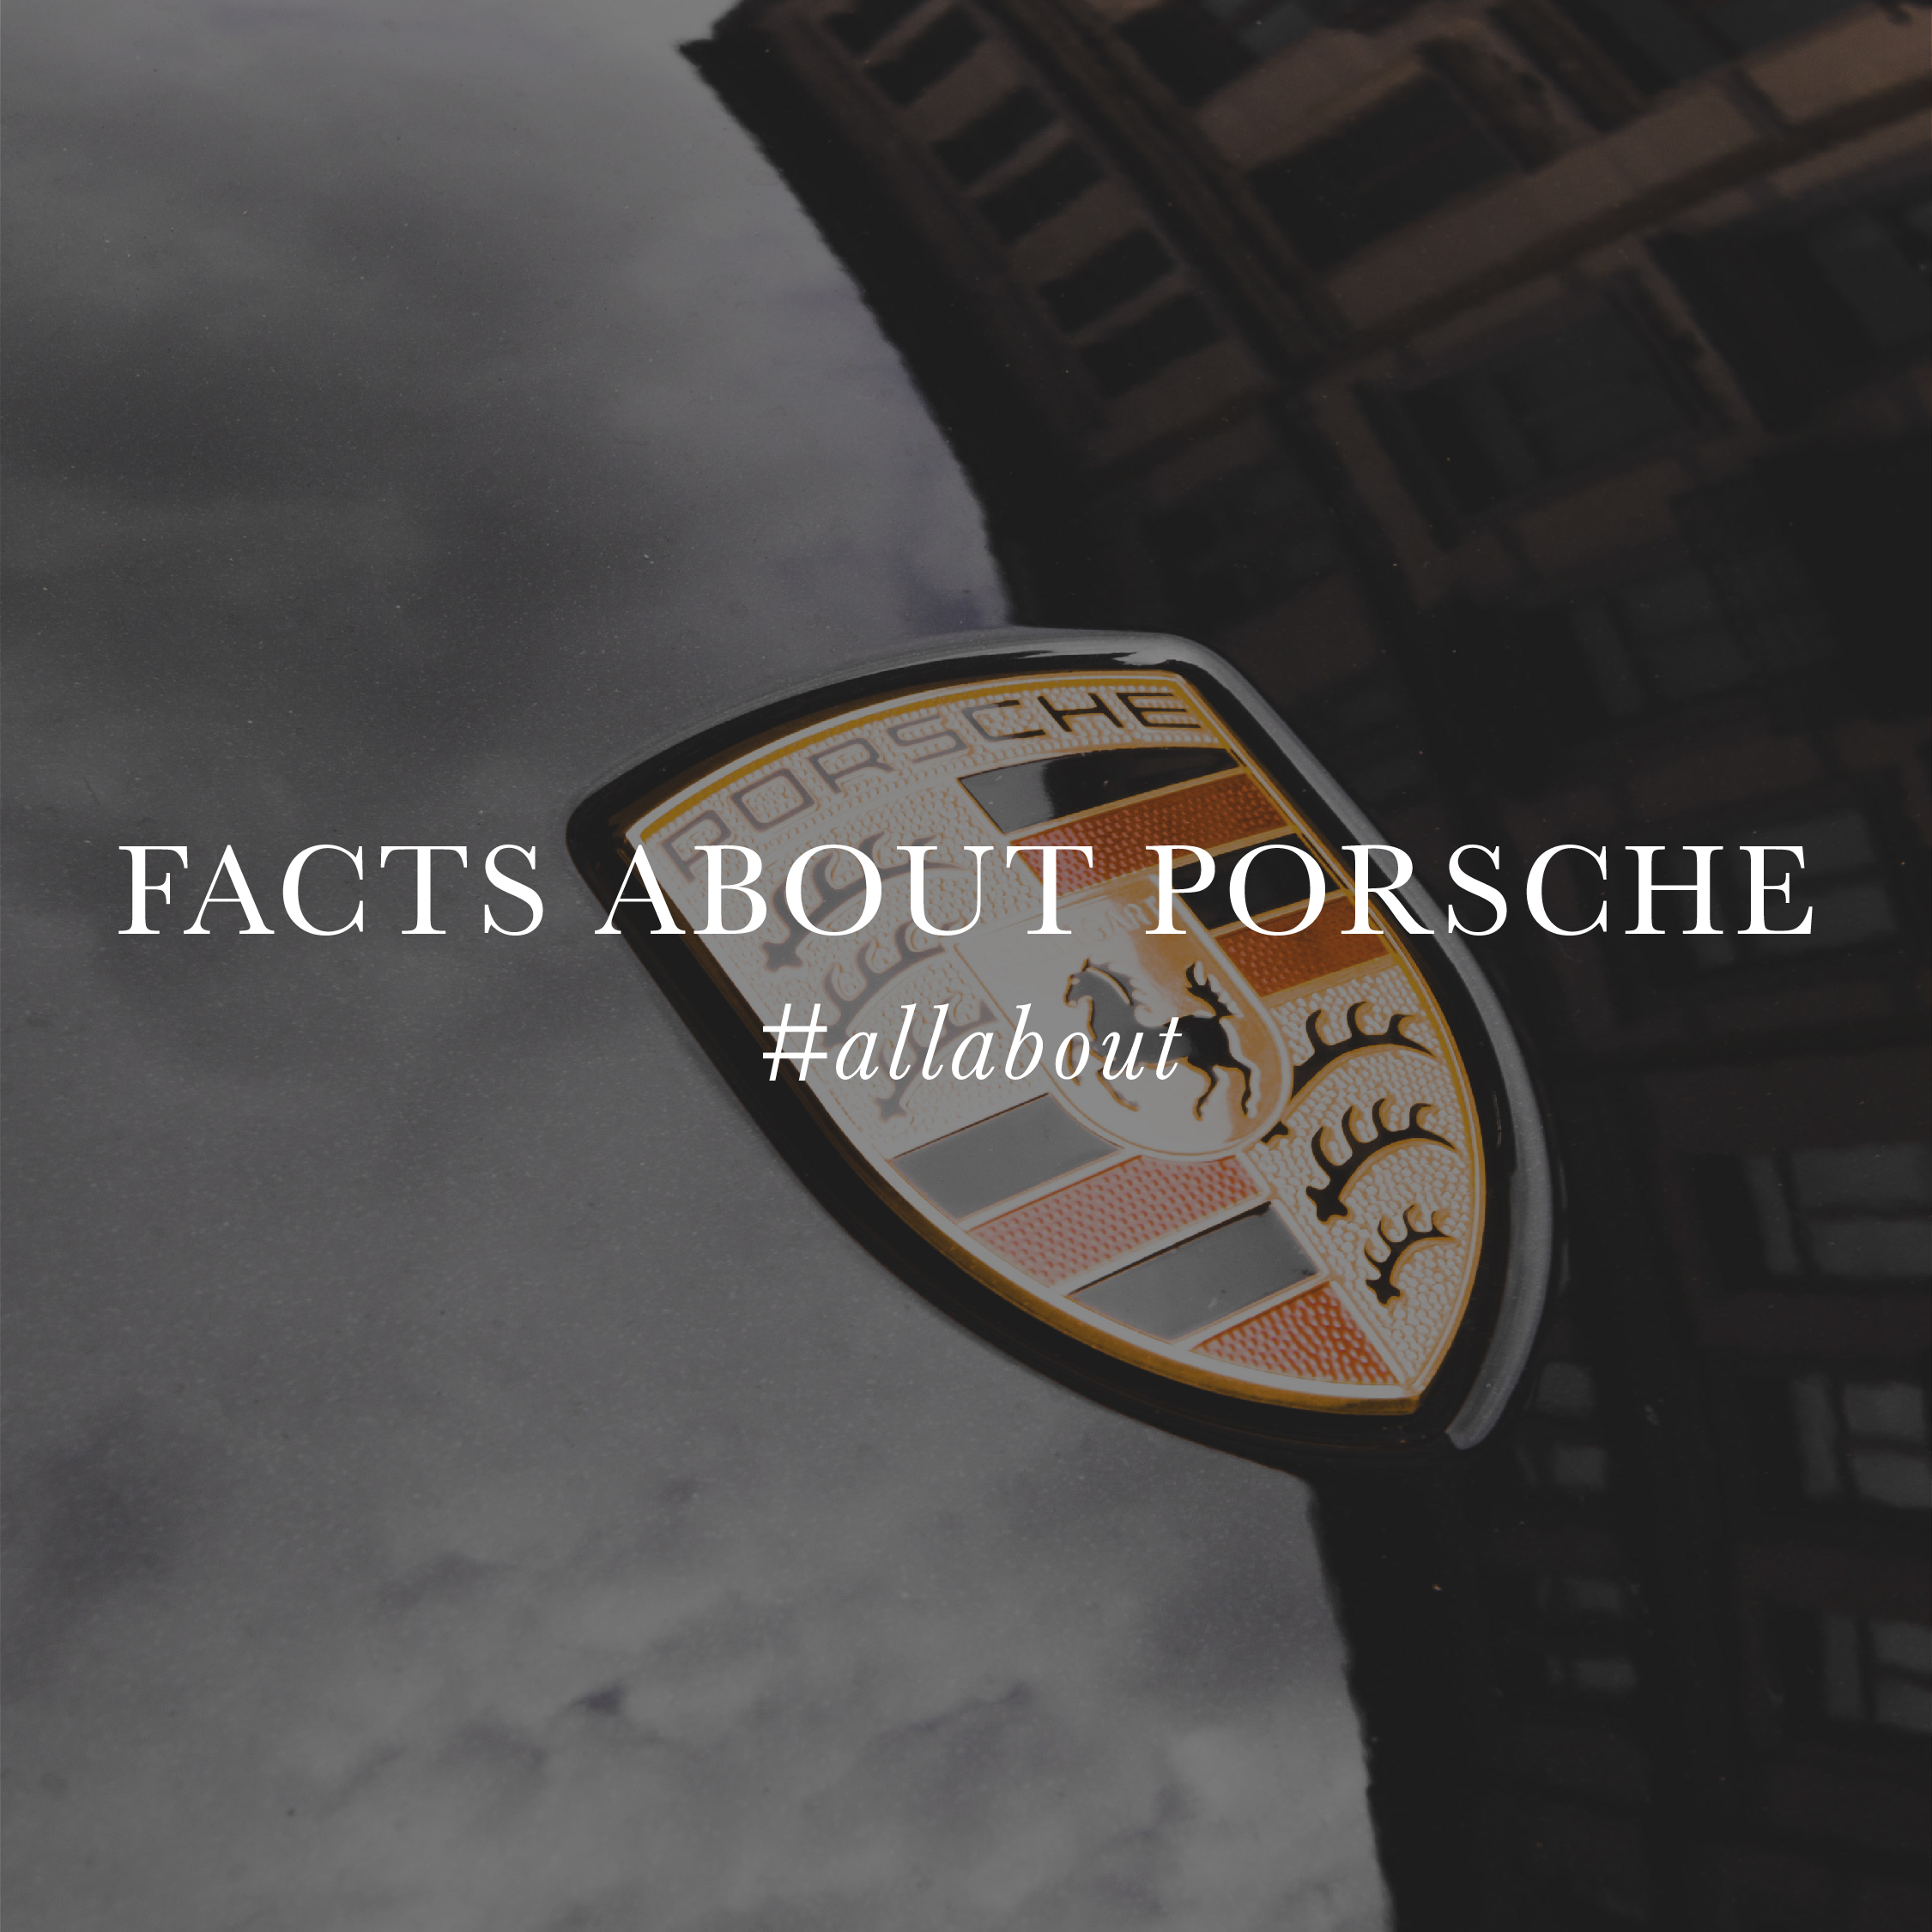 Porsche Facts